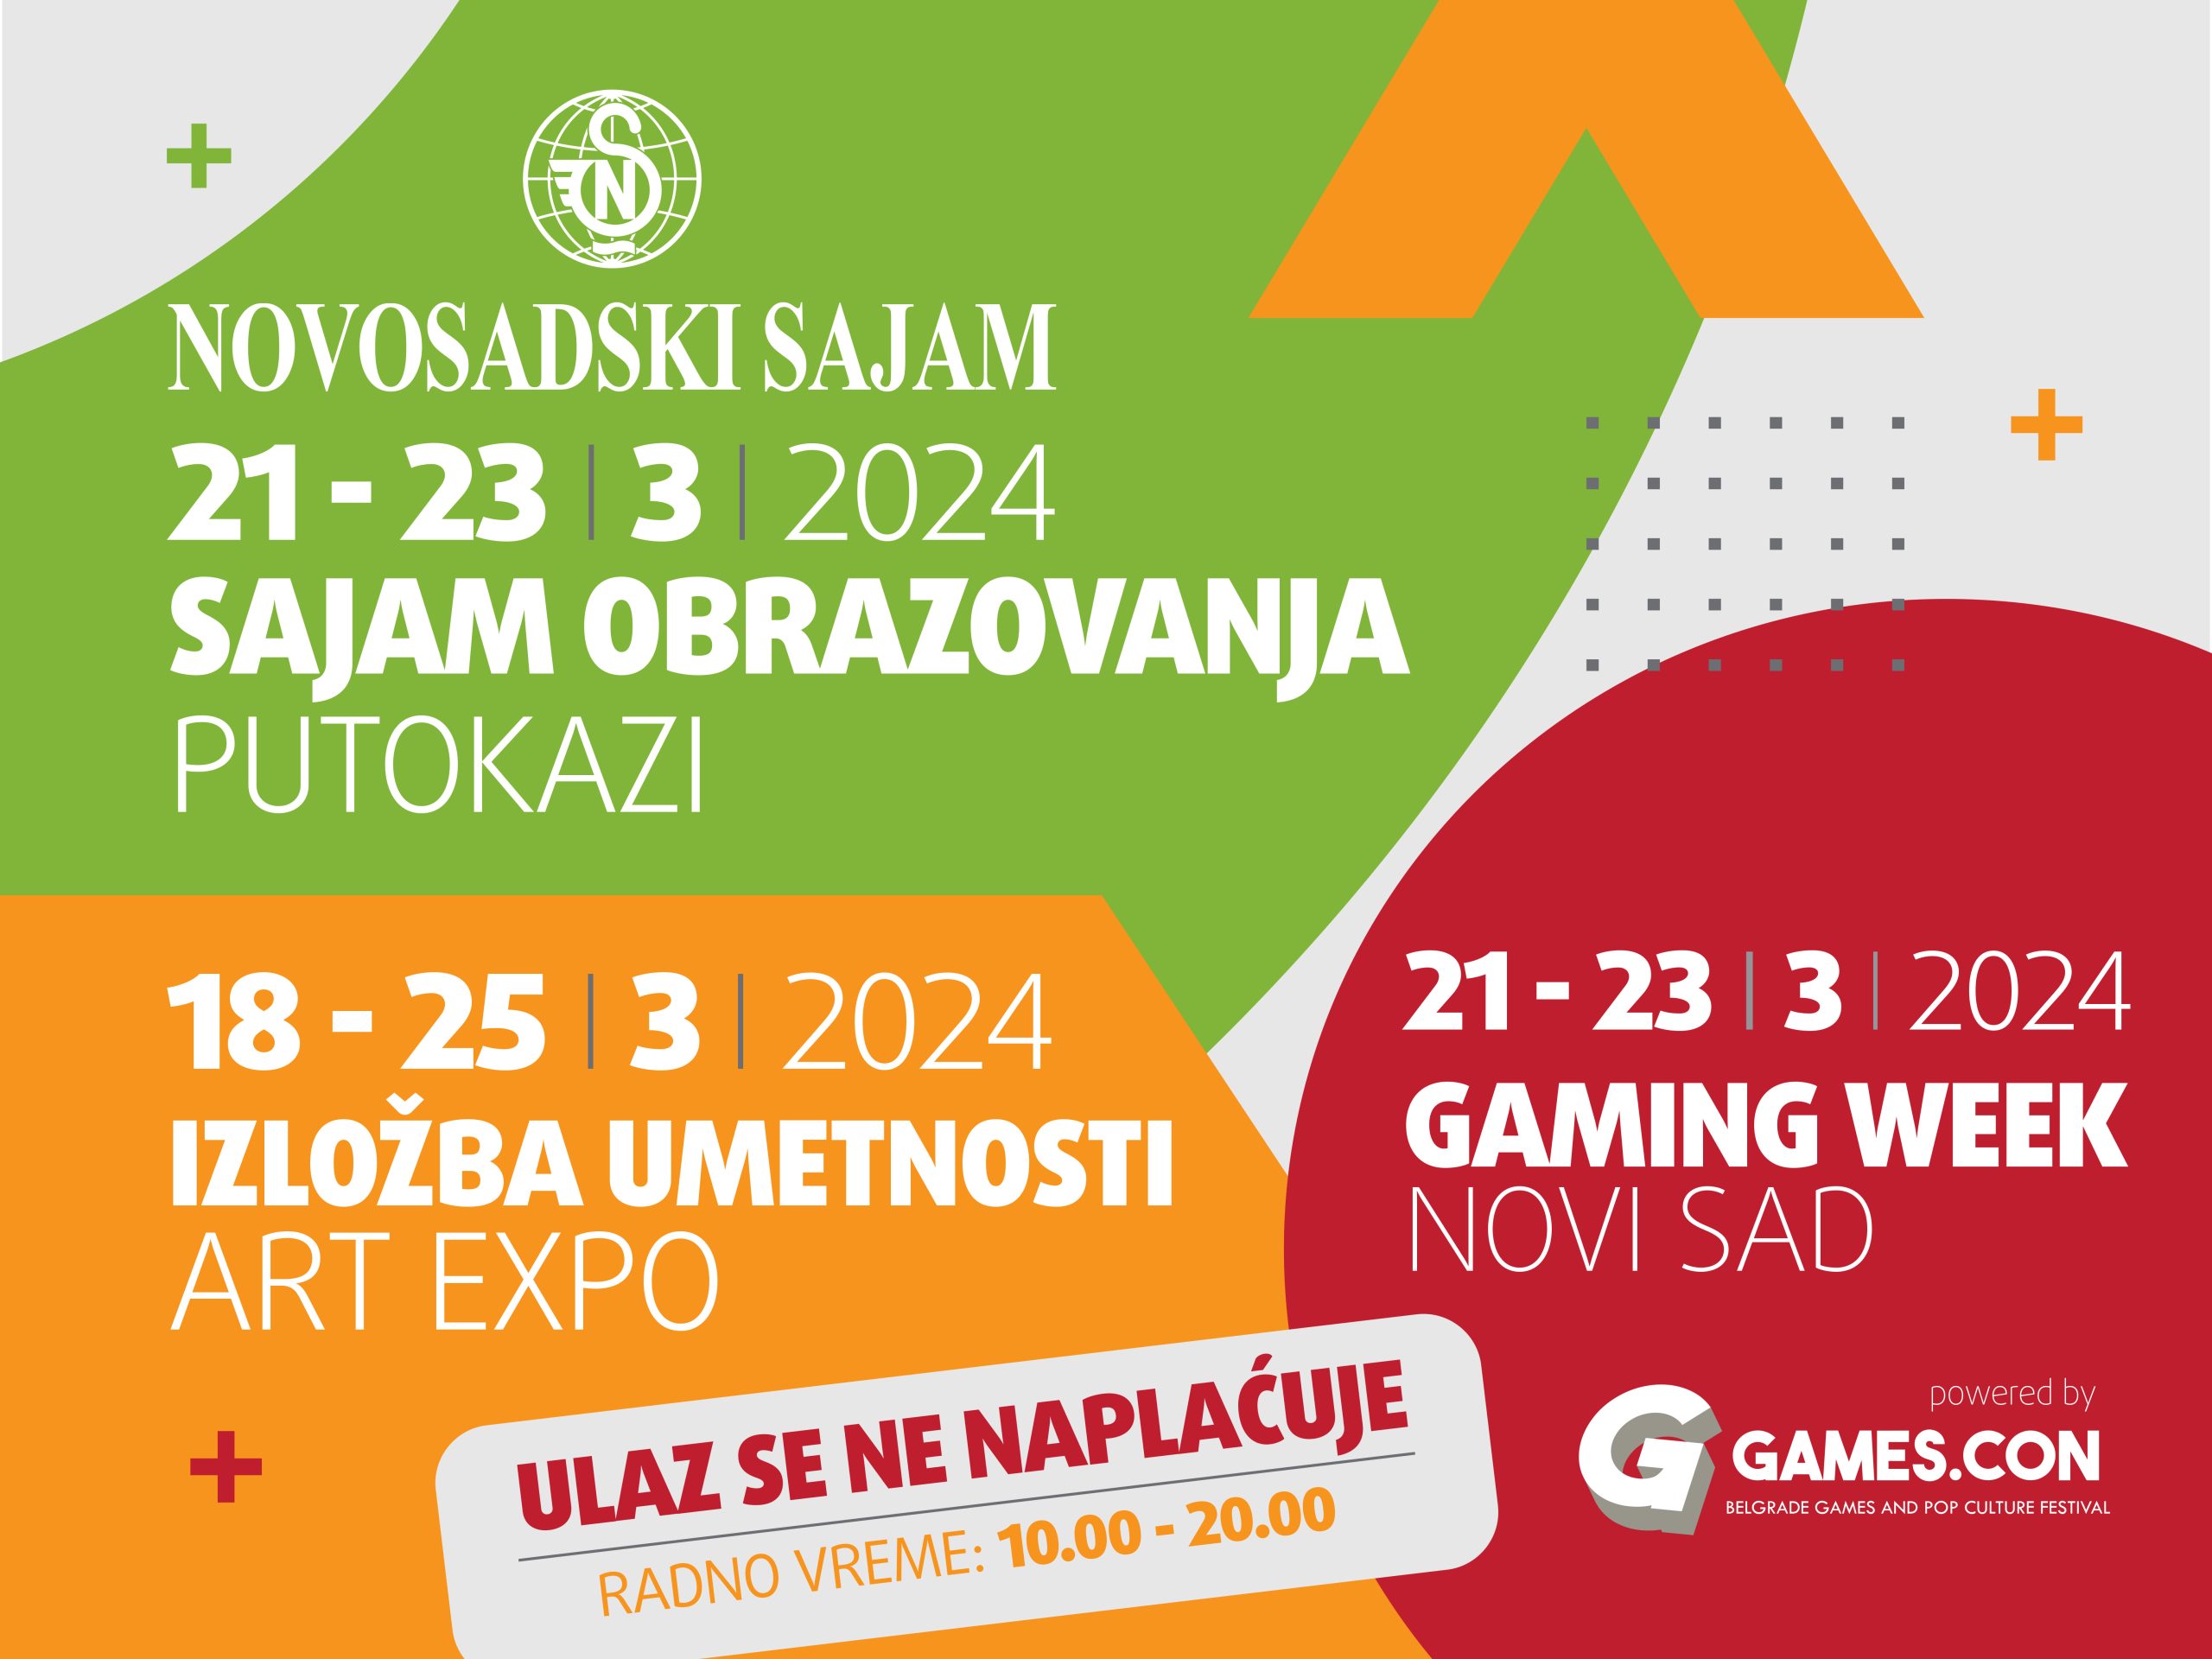 Games.con-NS-Gaming-Week-GC-kv-POST-24-1